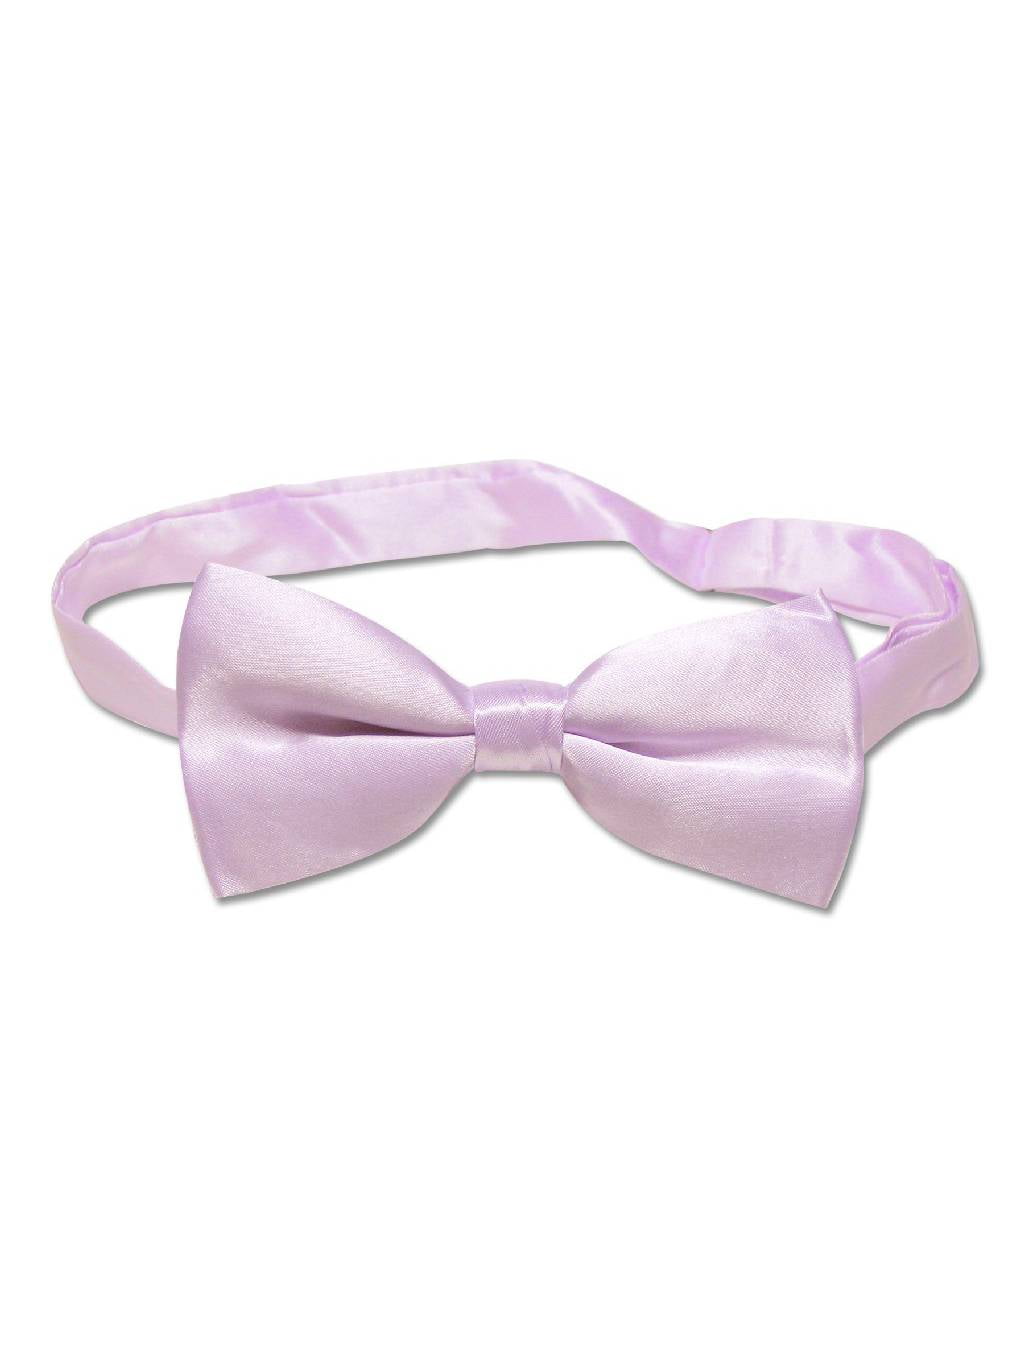 New Brand Q men's single pleat pre-tied bowtie solid formal prom Lavender 